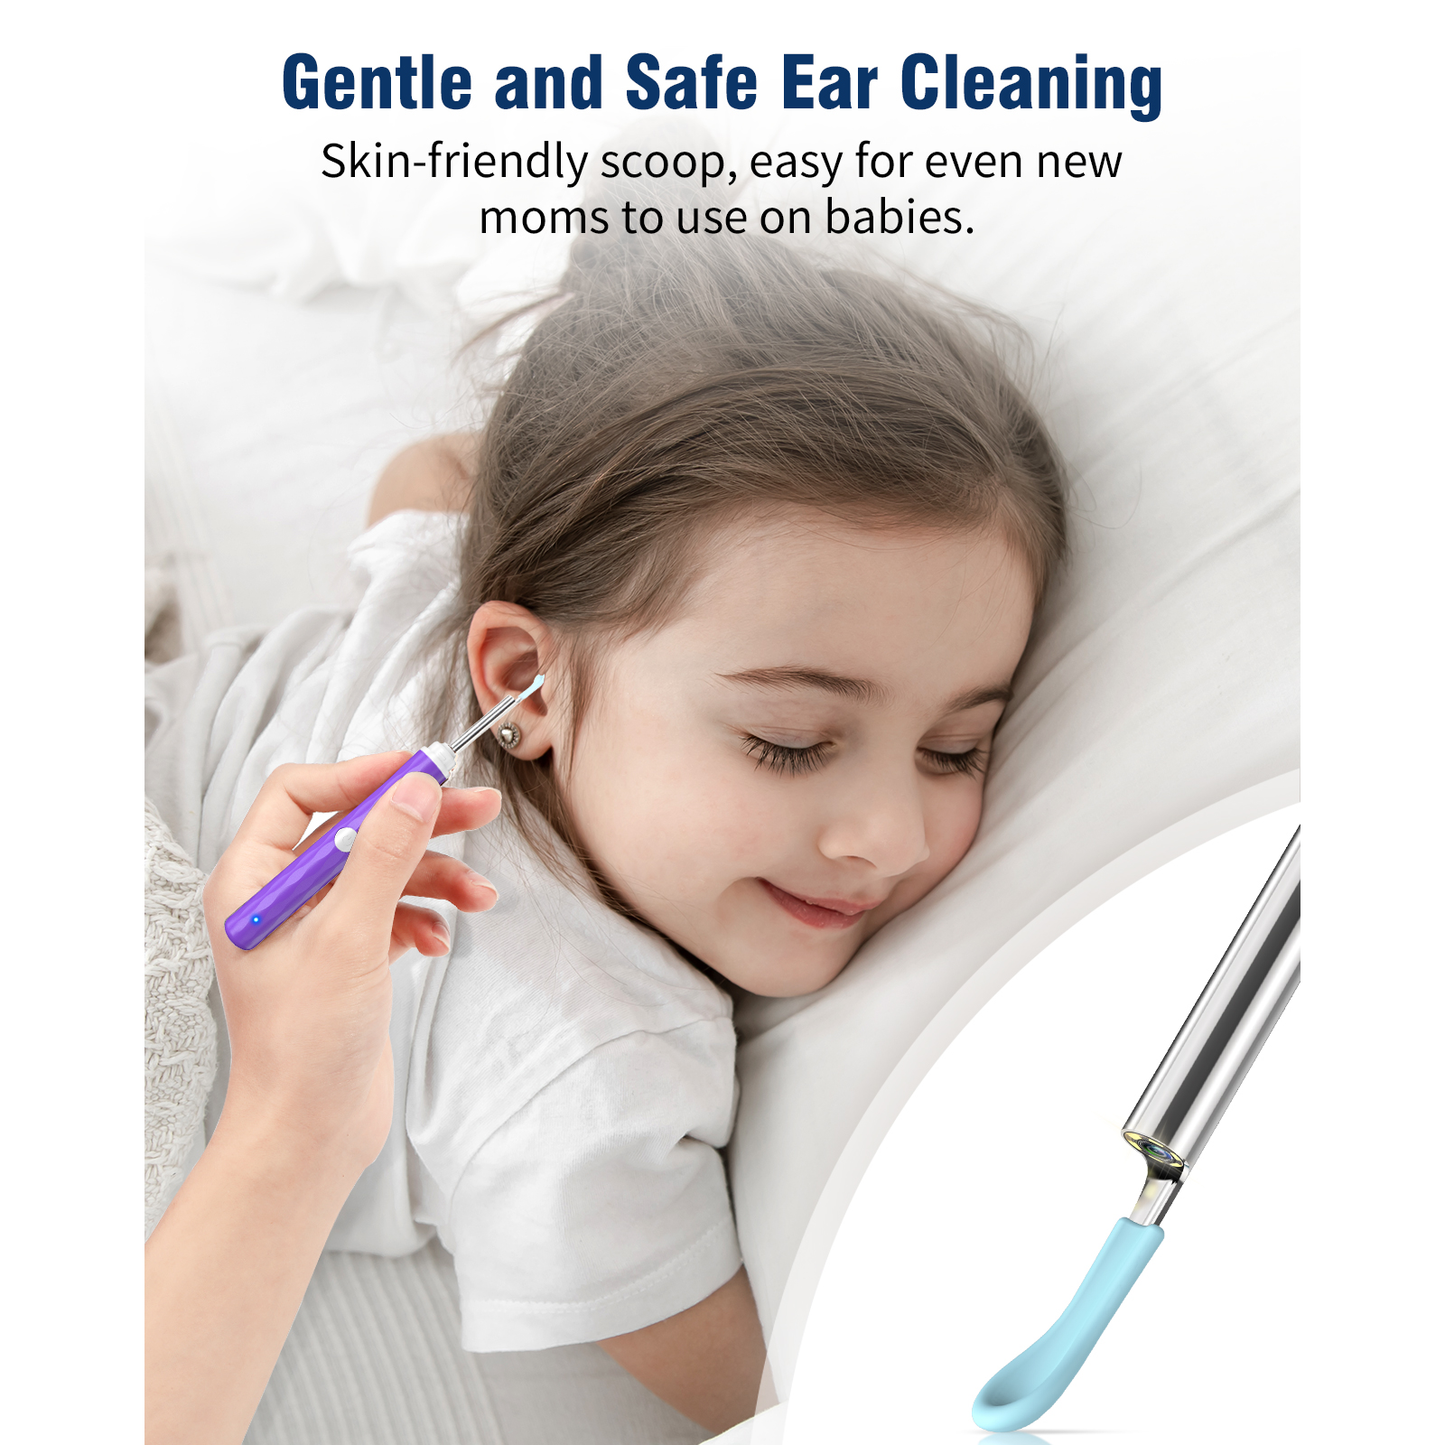 KEKOY Multifunctional Ear Canal Visible Ear Wax Removal Set